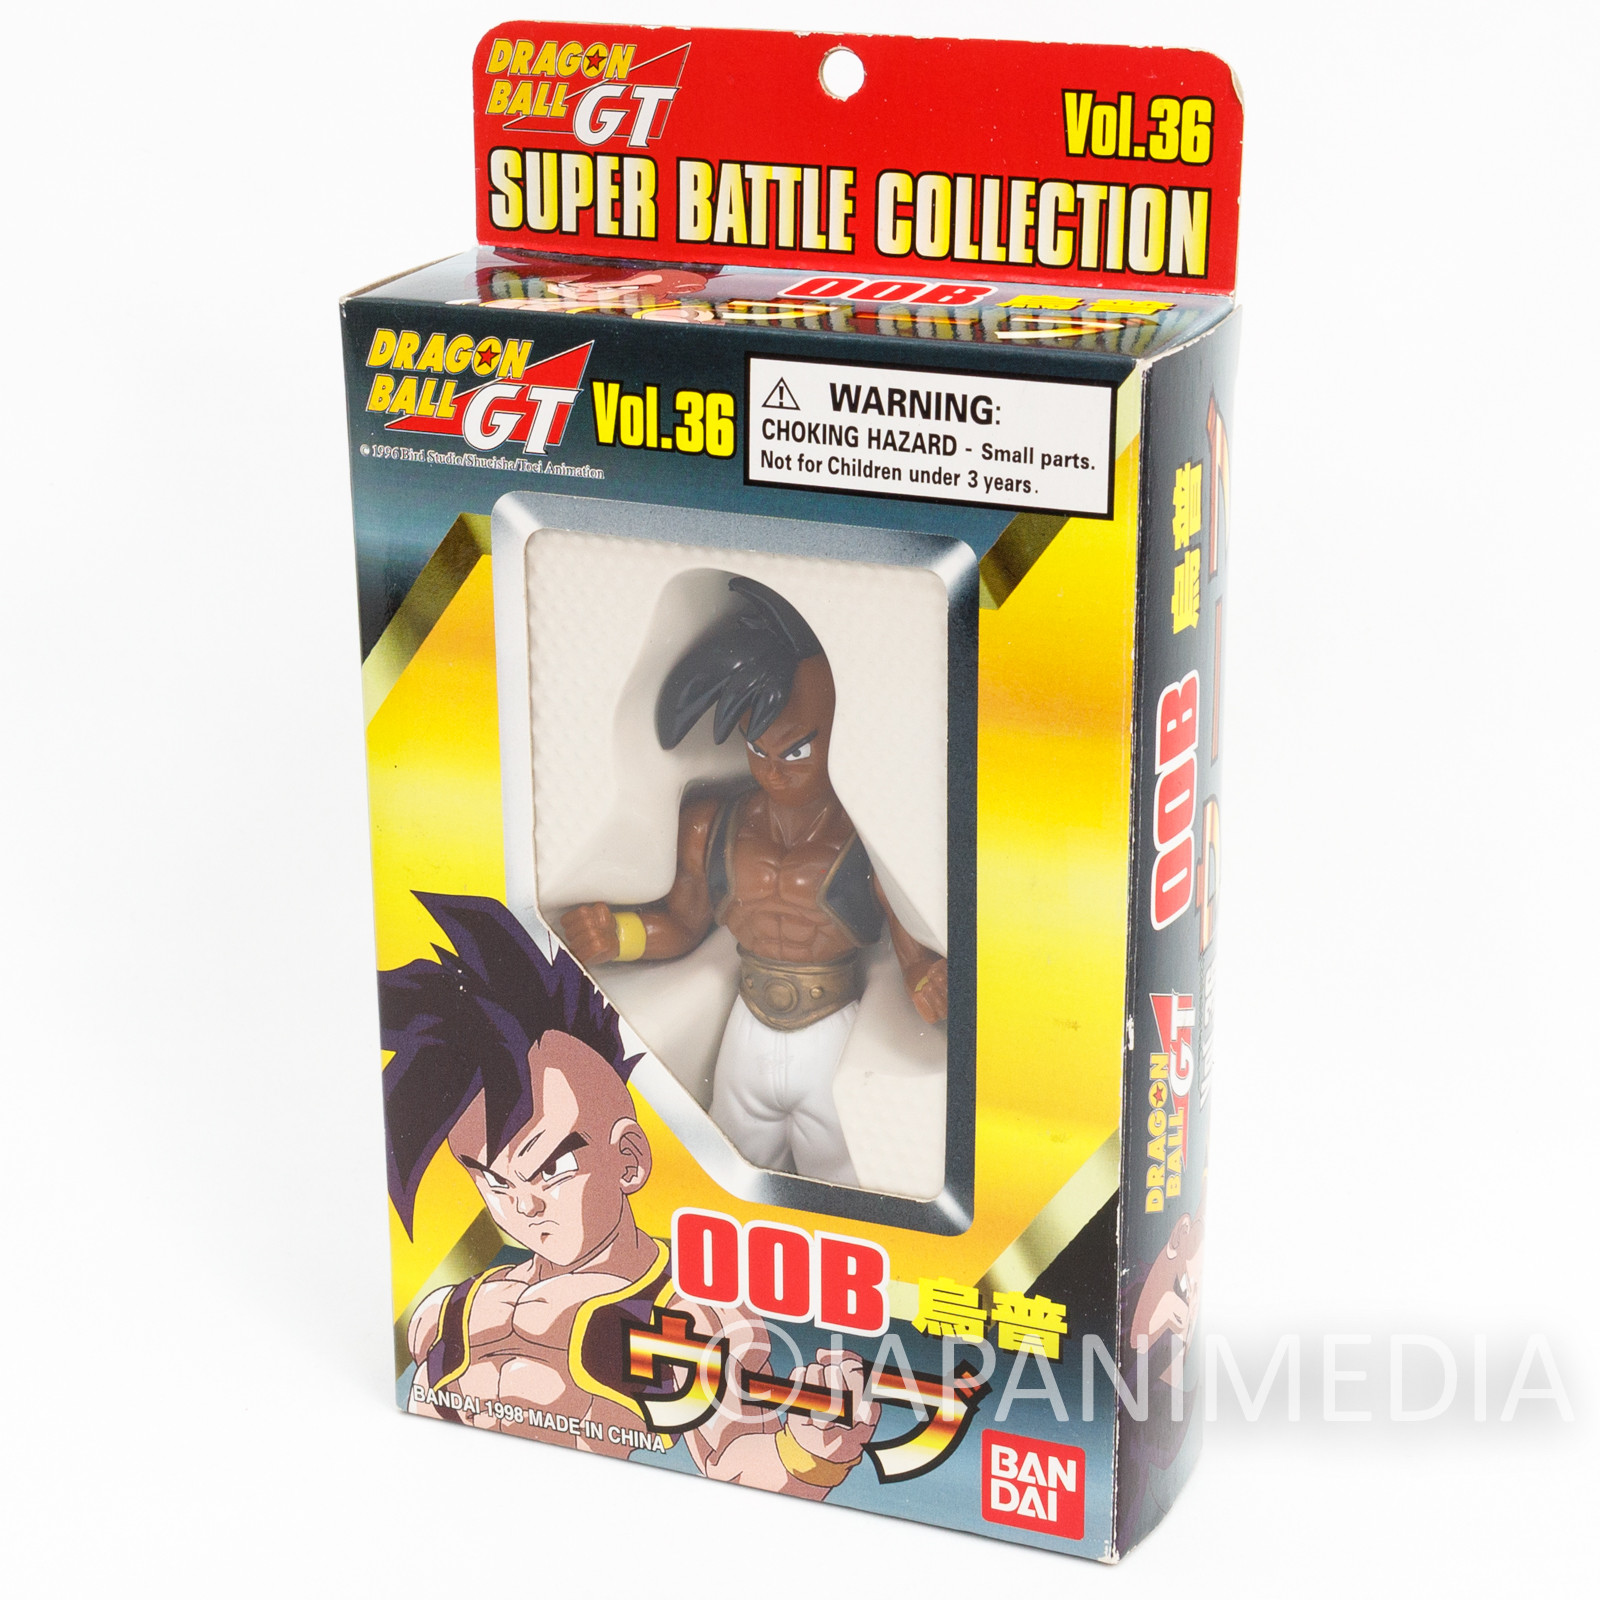 RARE! Dragon Ball GT Super Battle Collection Figure Uub Oob BANDAI 1998